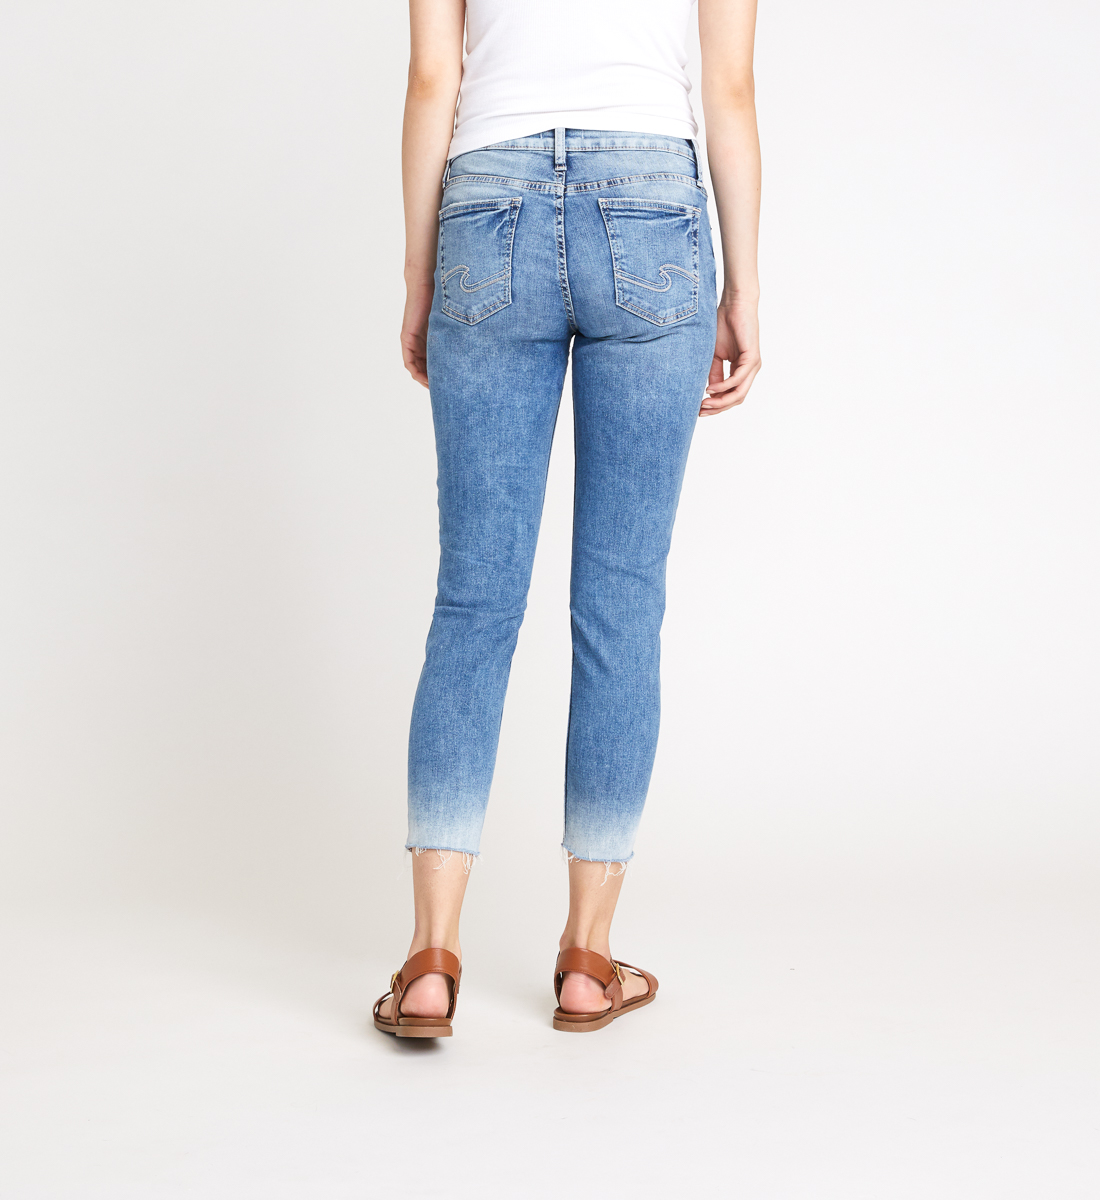 Elyse Mid Rise Skinny Crop Jeans - Silver Jeans US